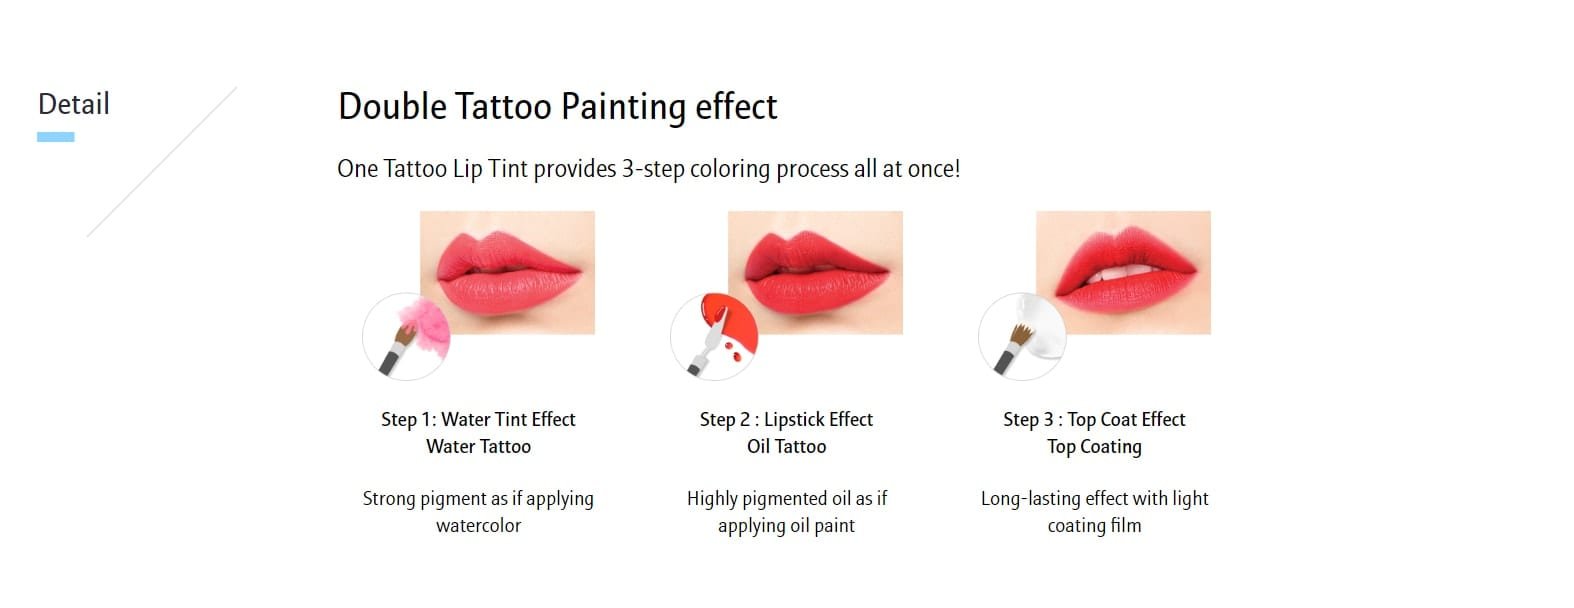 Laneige Tattoo Lip Tint - details